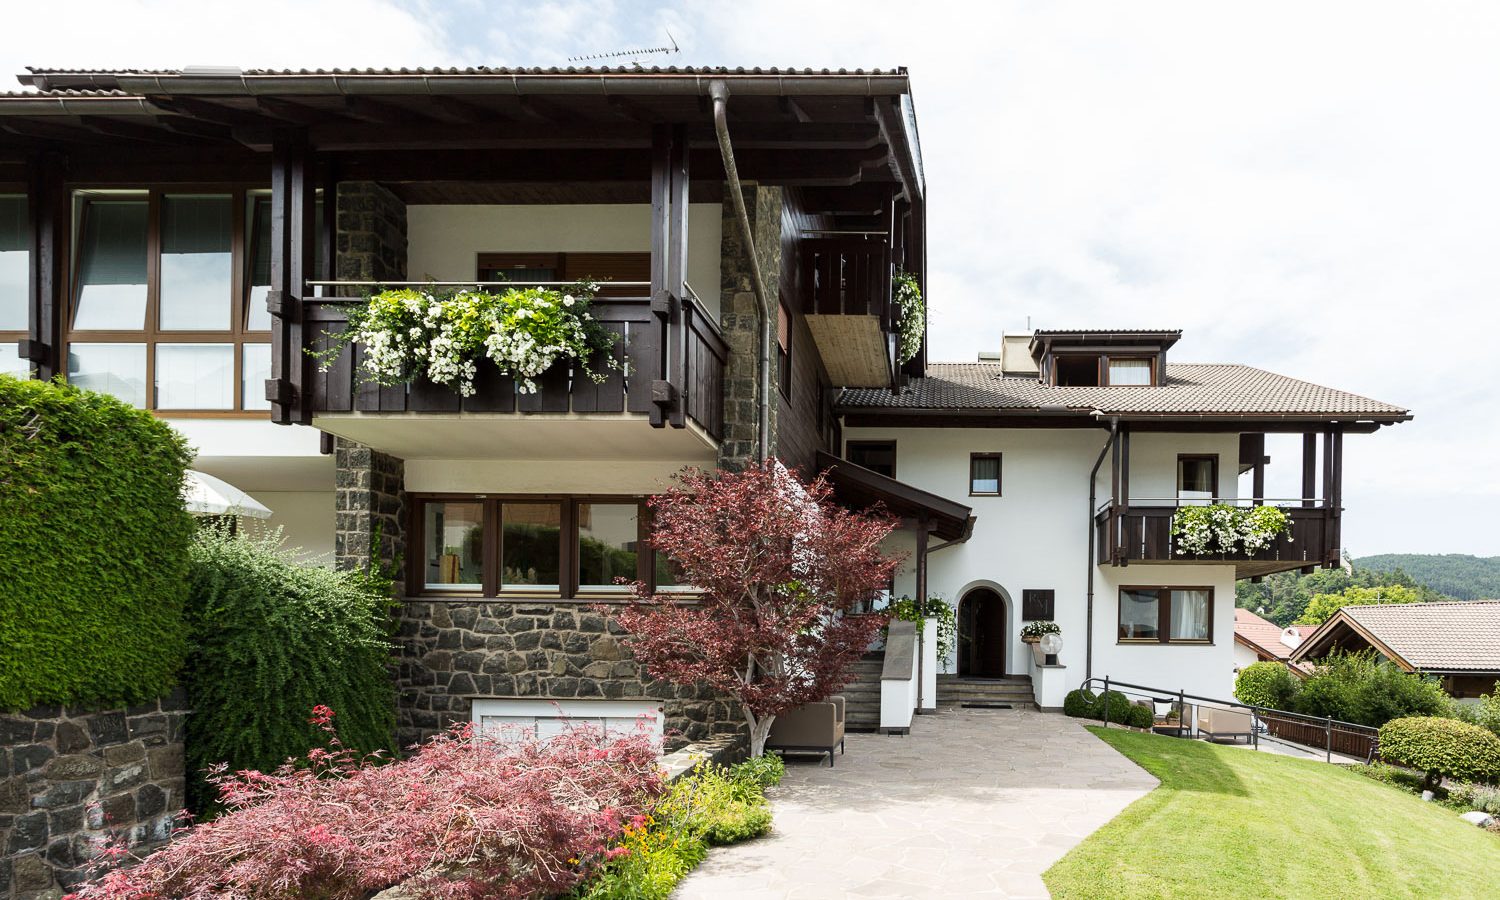 Area d'ingresso del Residence Mayr Alto Adige